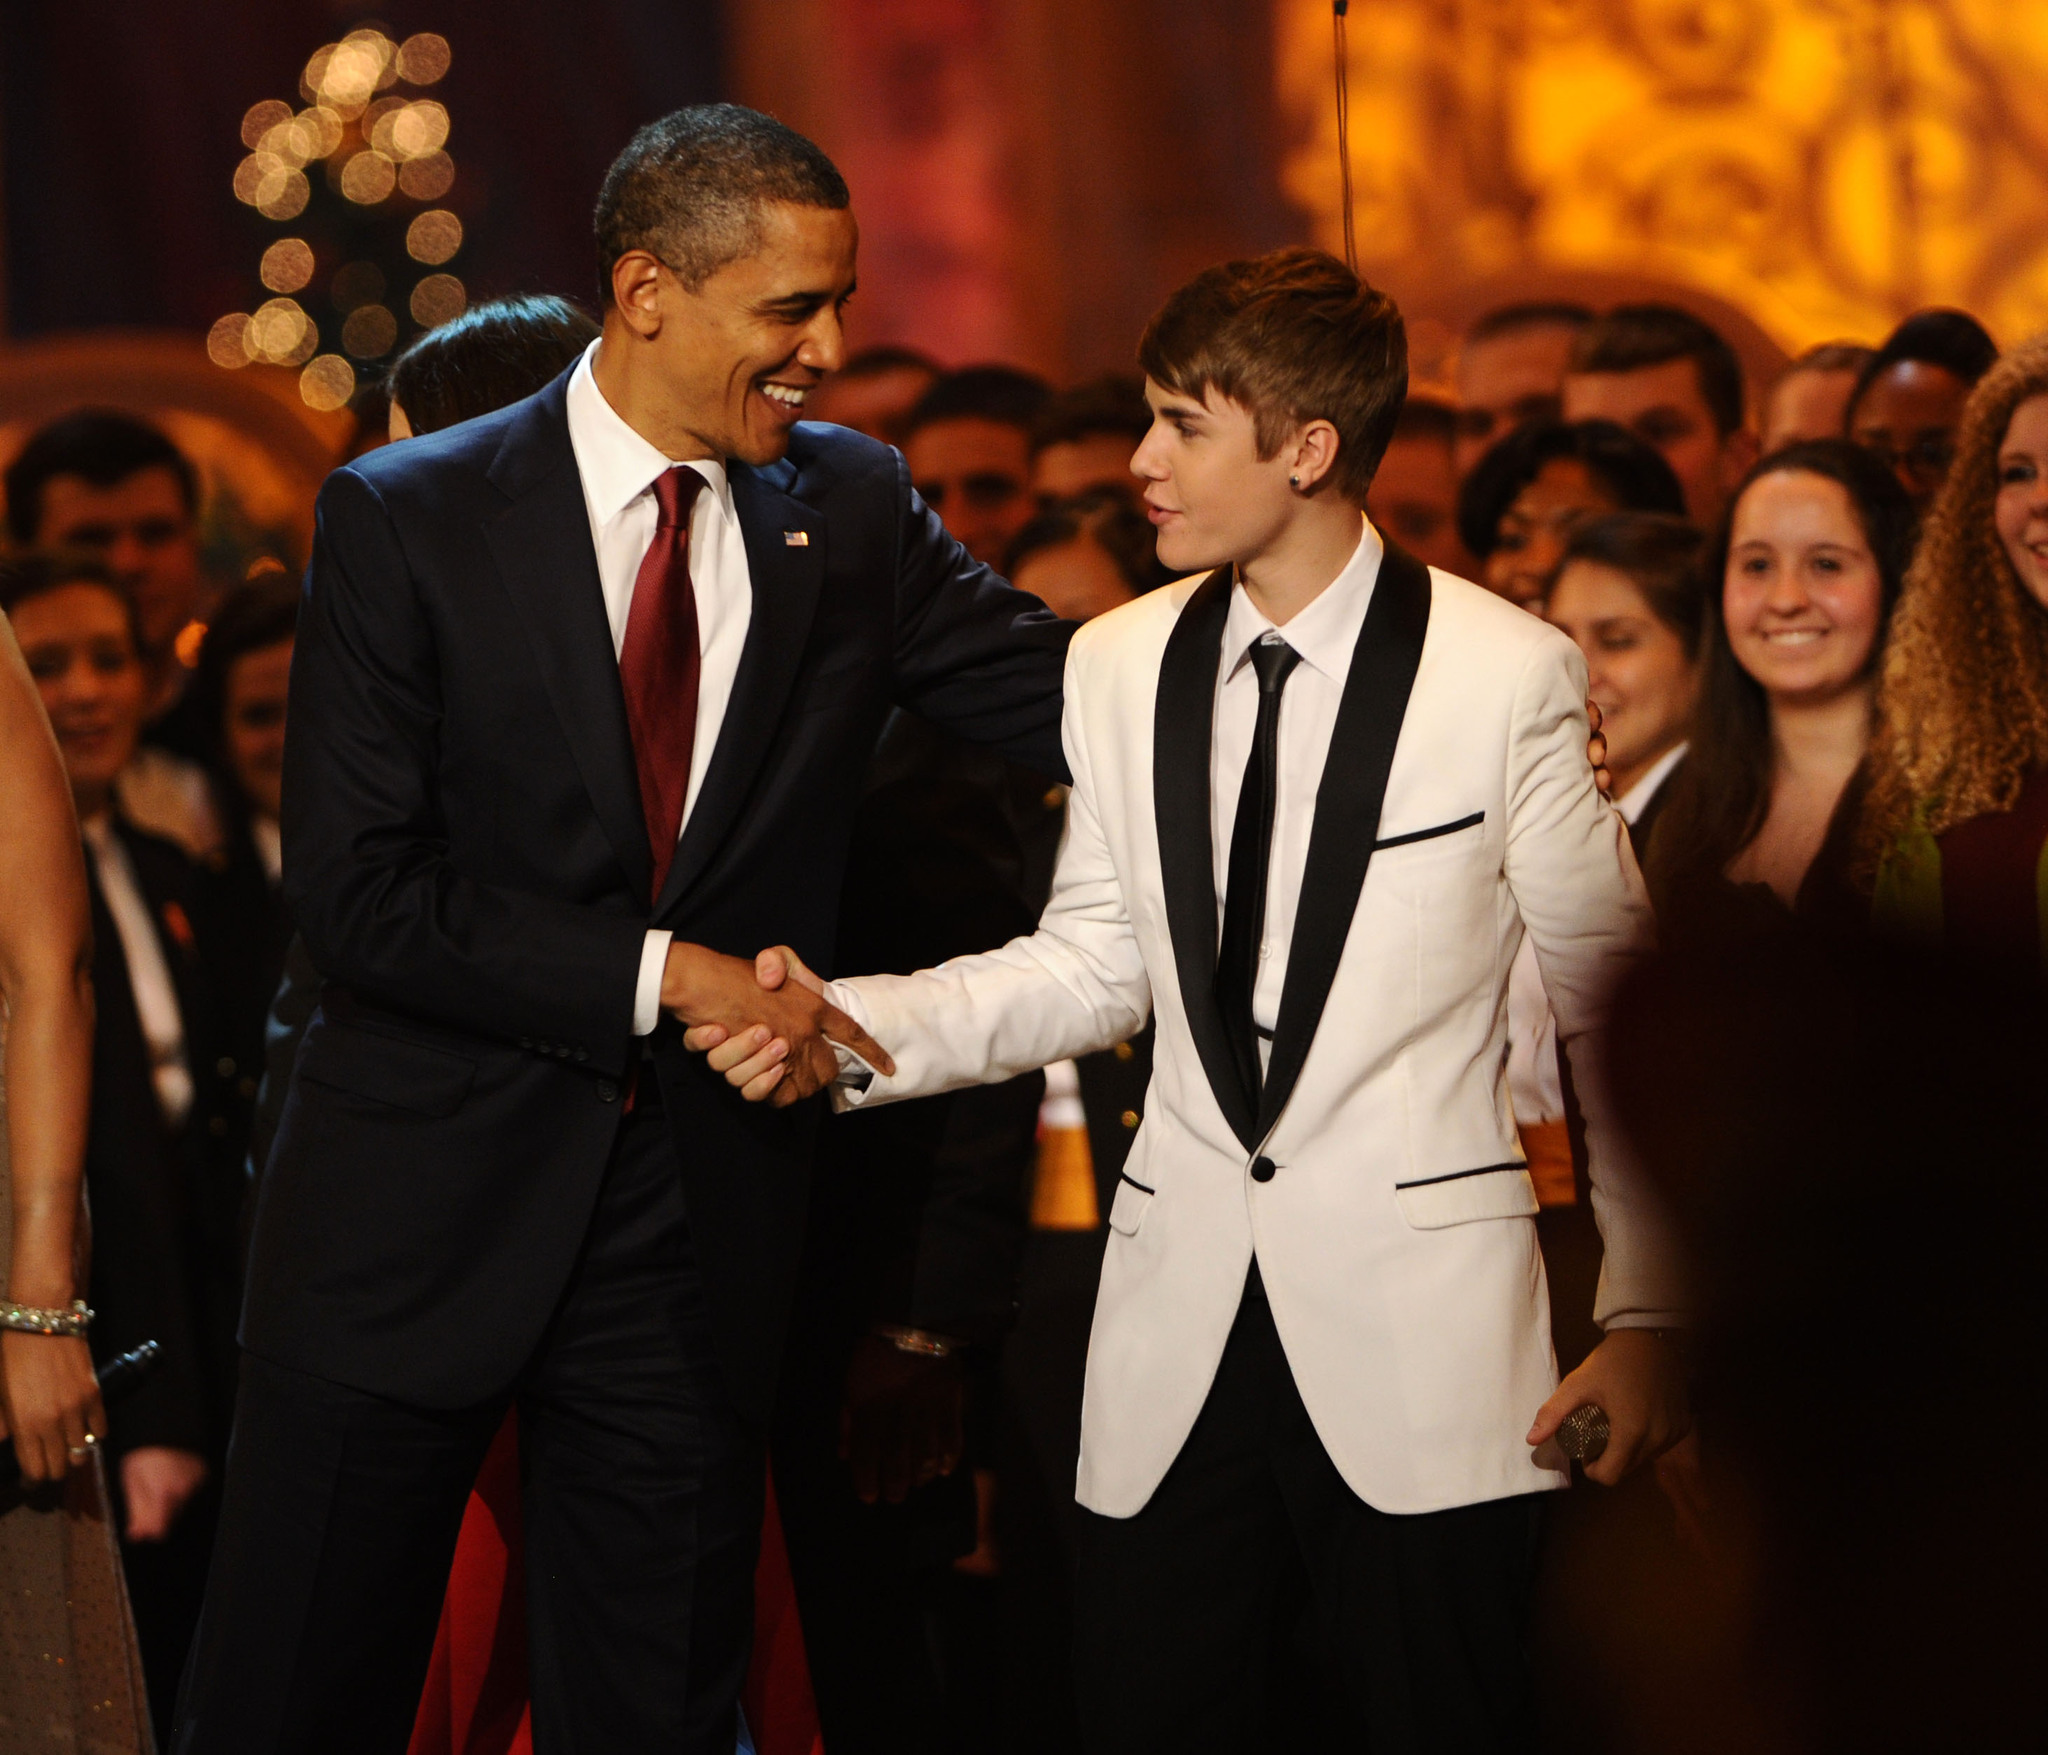 Barack Obama and Justin Bieber